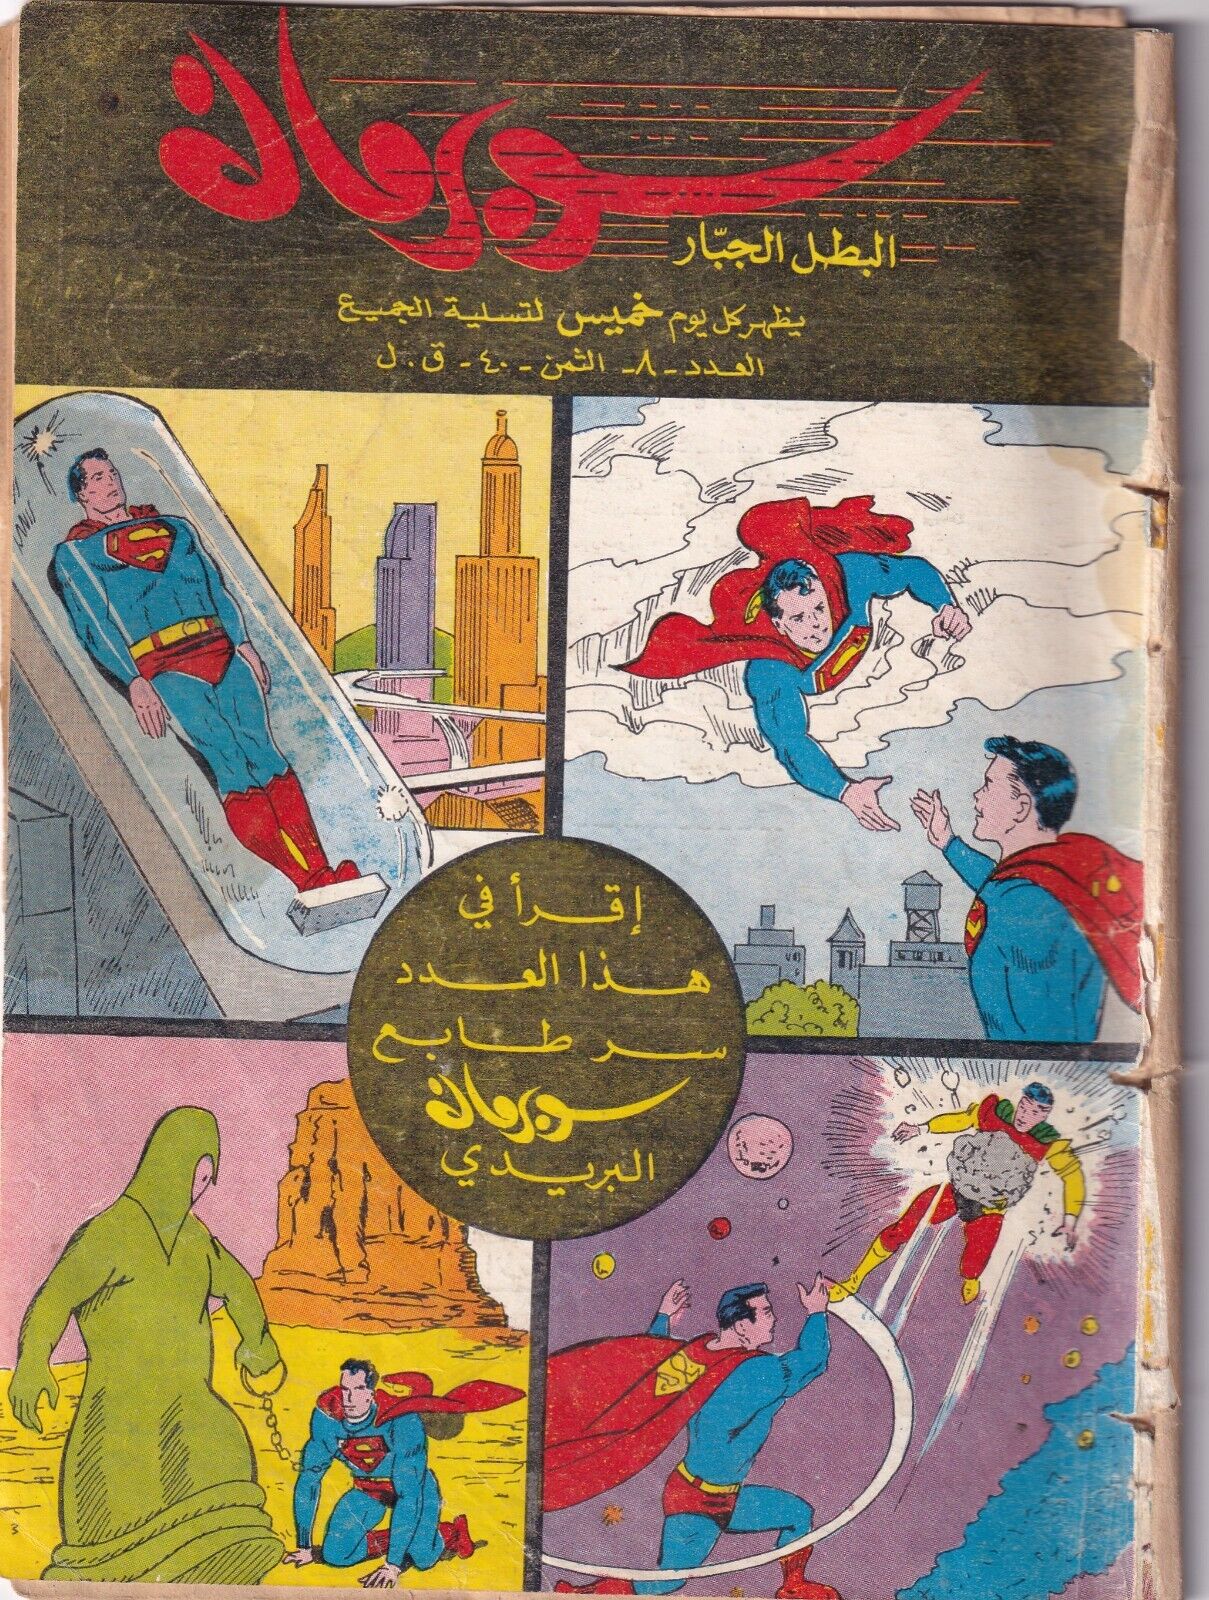 SUPERMAN LEBANESE ARABIC ORIGINAL COMICS 1964 NO. 8 COLORED مجلة سوبر مان كوميكس